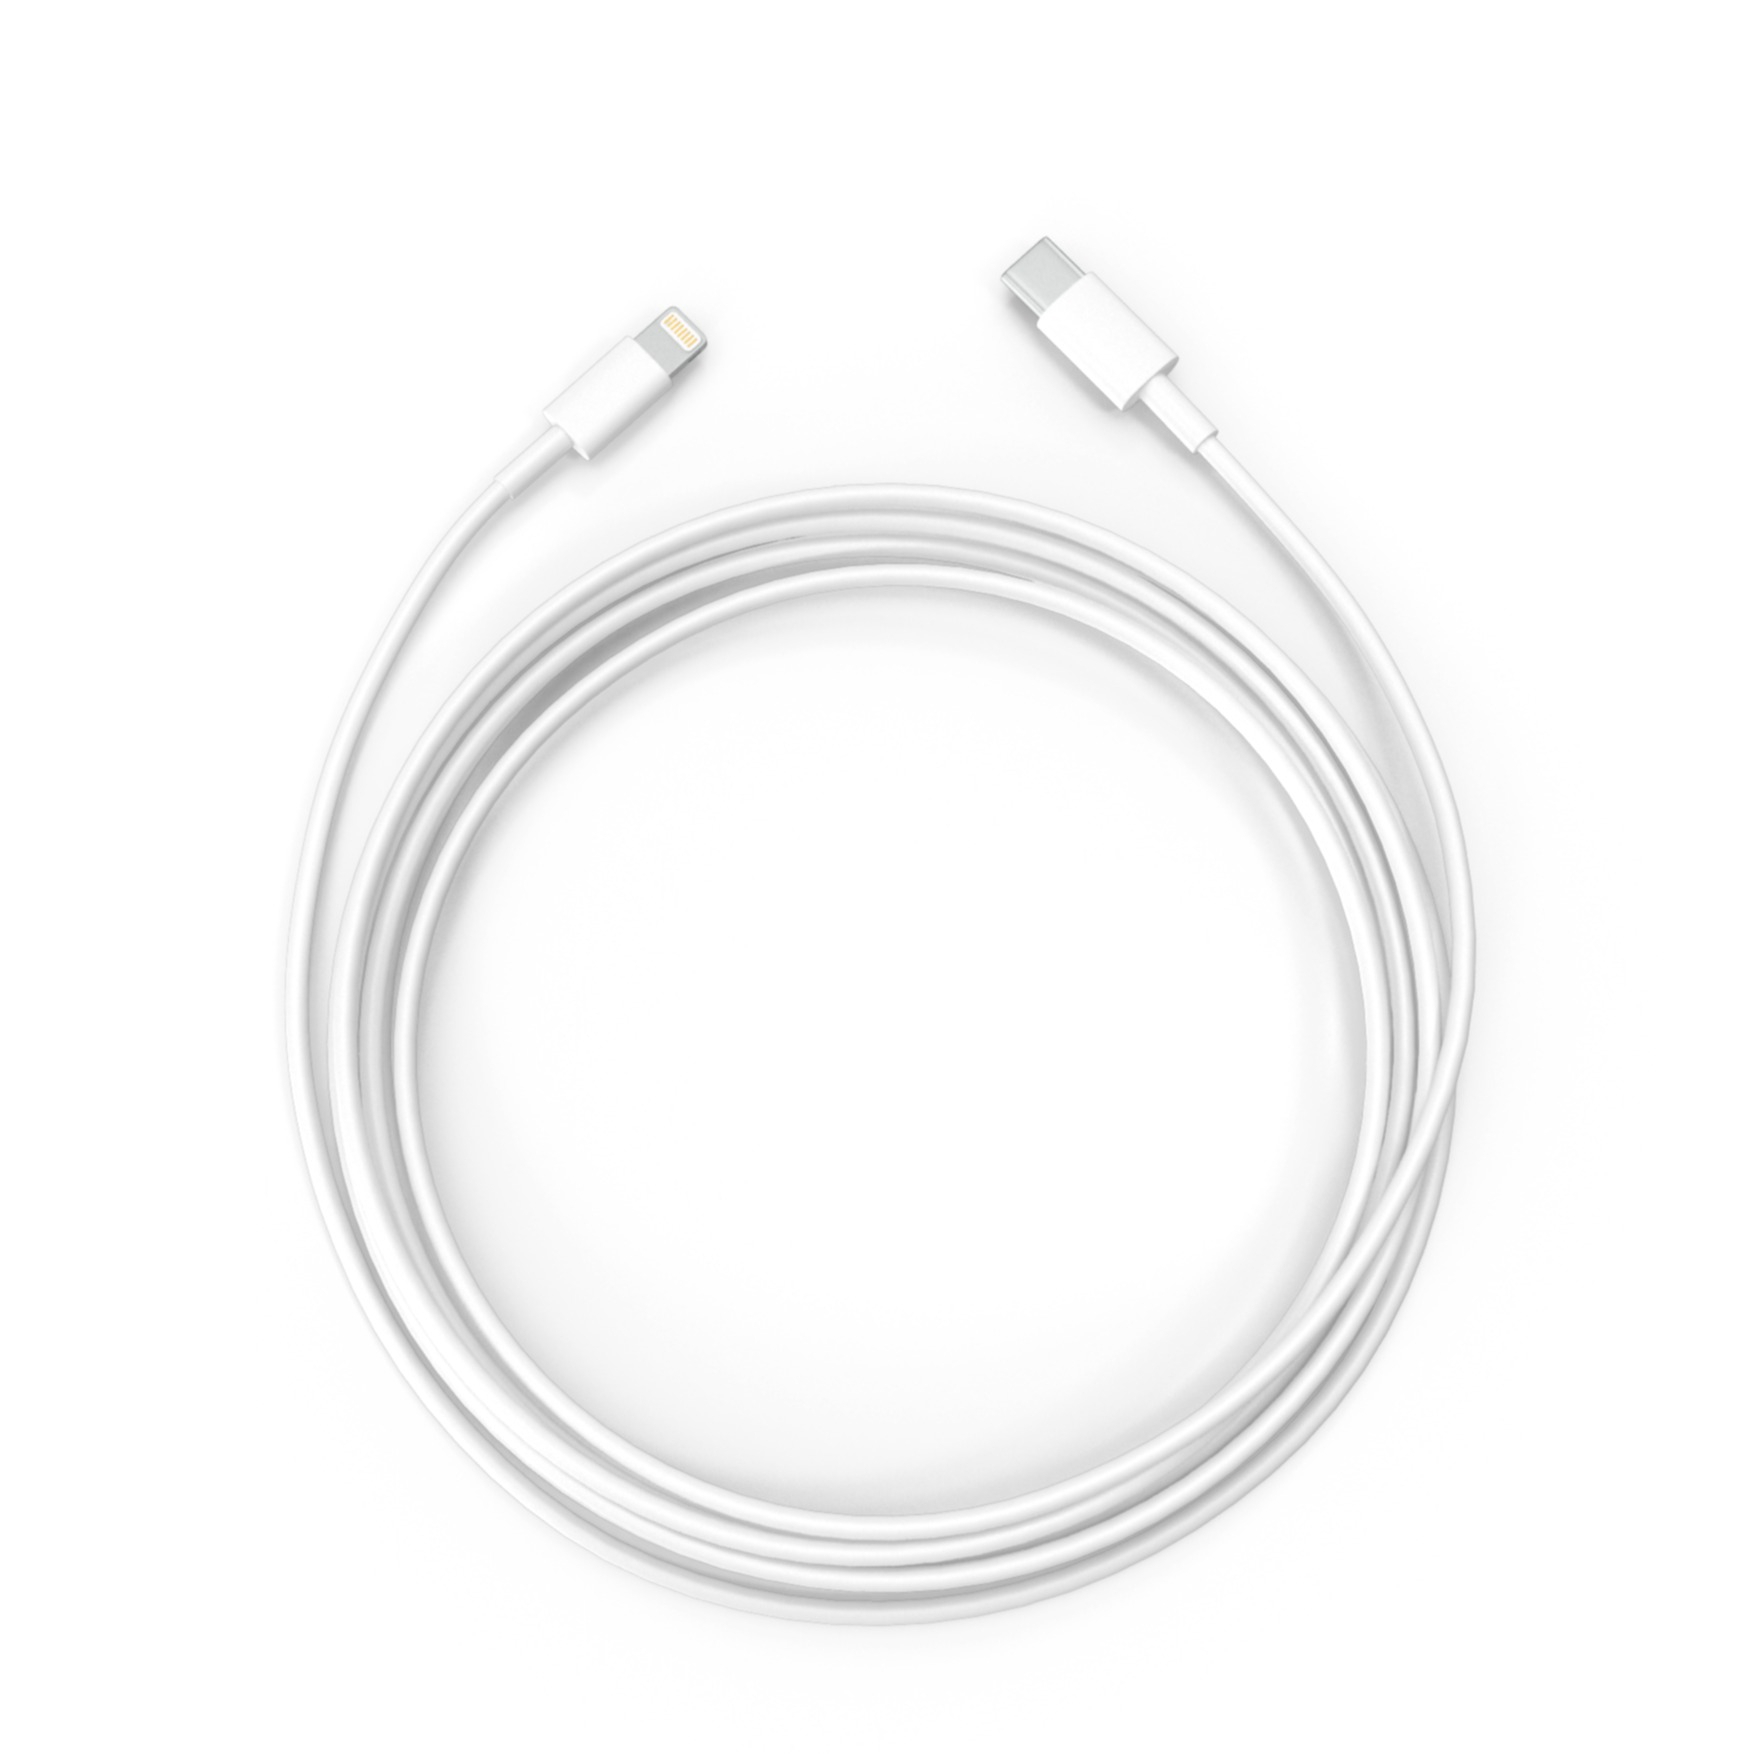 Image of Apple - (1m) iPhone 11 Pro Lightning auf USB C Ladekabel Datenkabel MK0X2ZM/A - Weiss bei Apfelkiste.ch